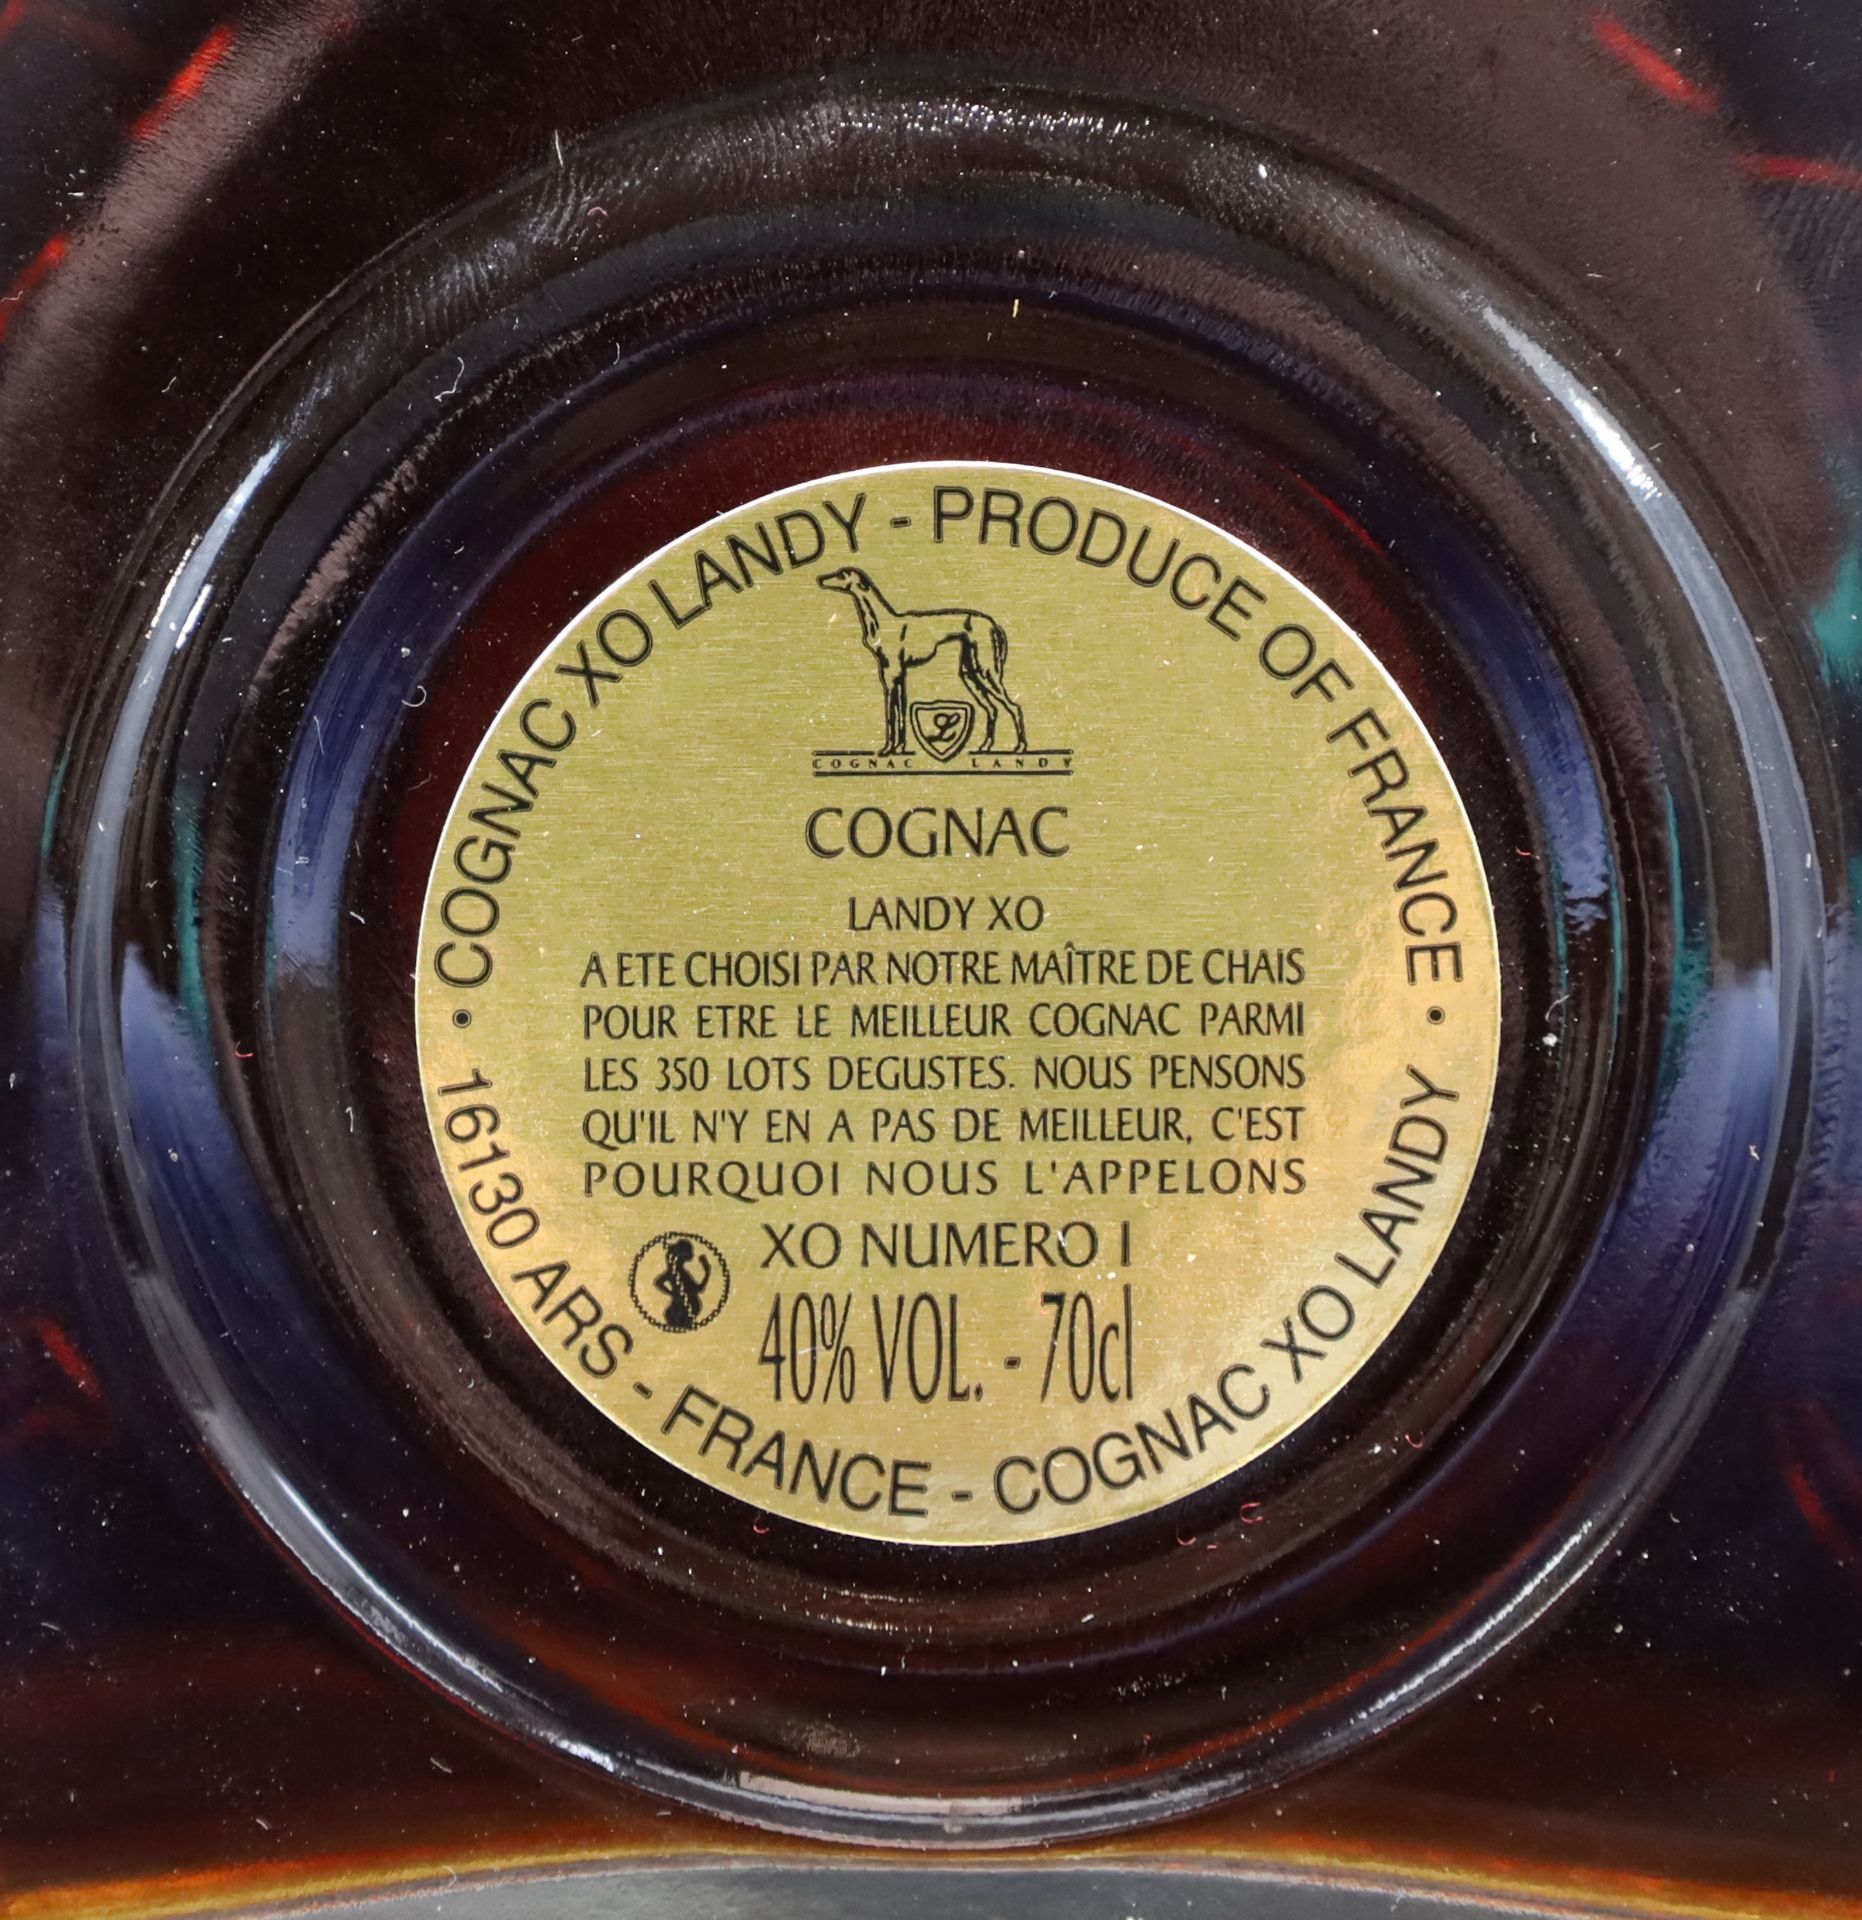 1 bottle of cognac. LANDY. XO No. 1. France. - Image 6 of 7